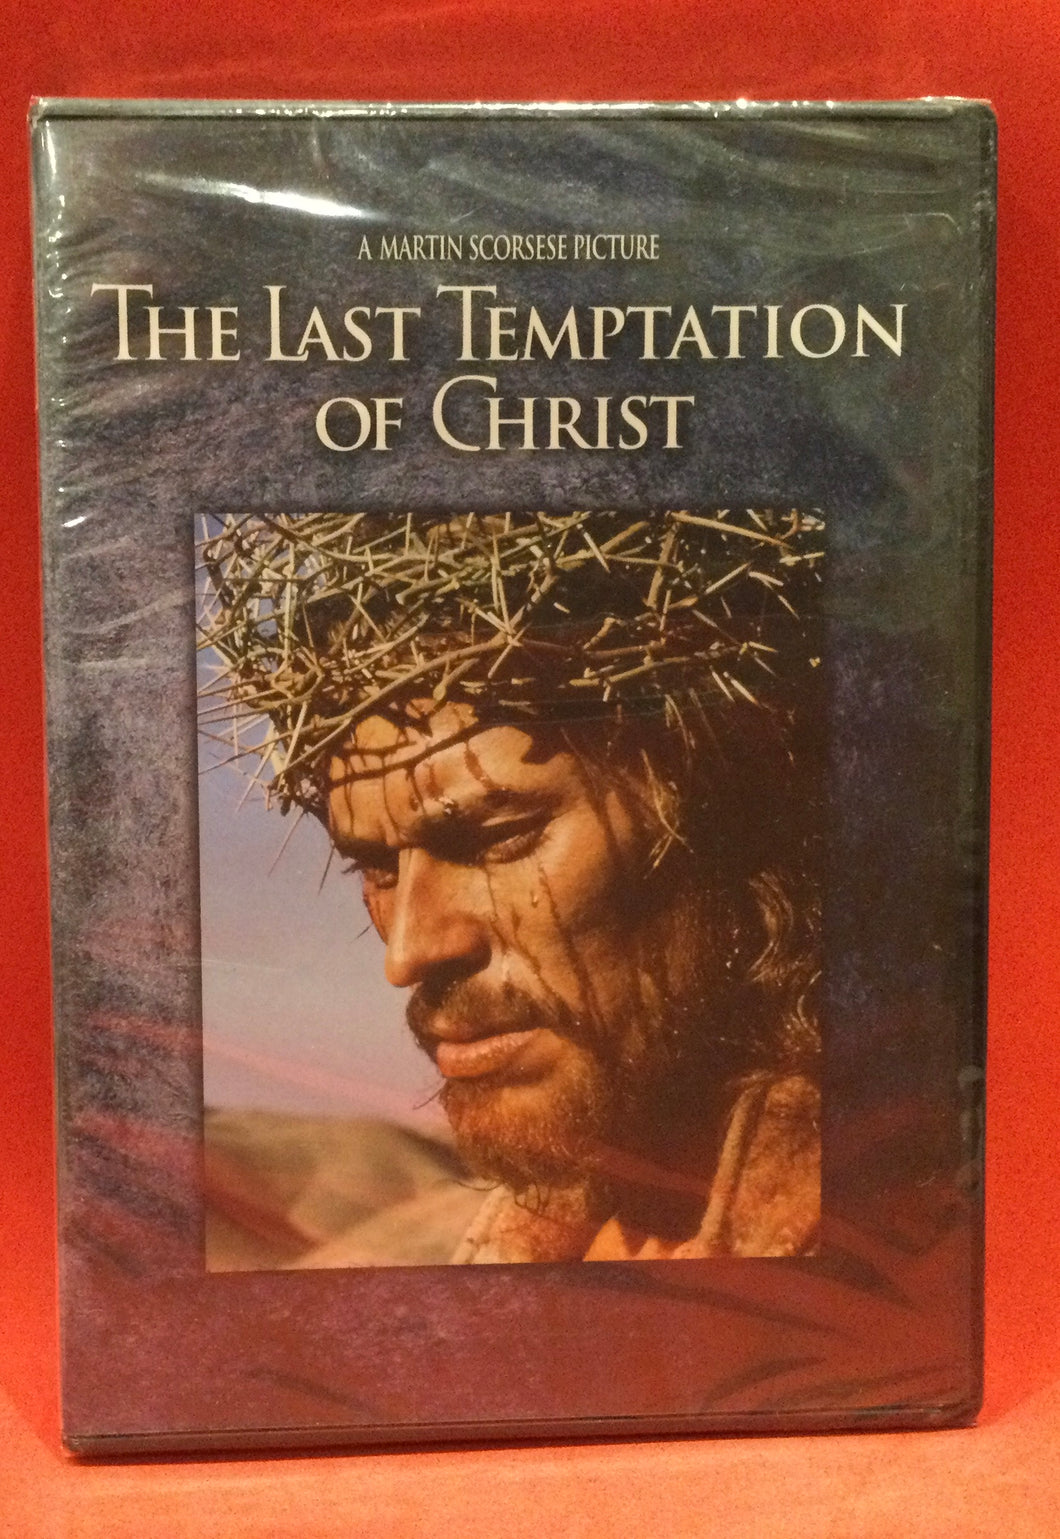 LAST TEMPTATION OF CHRIST, THE  DVD - MARTIN SCOSESE  (SEALED)